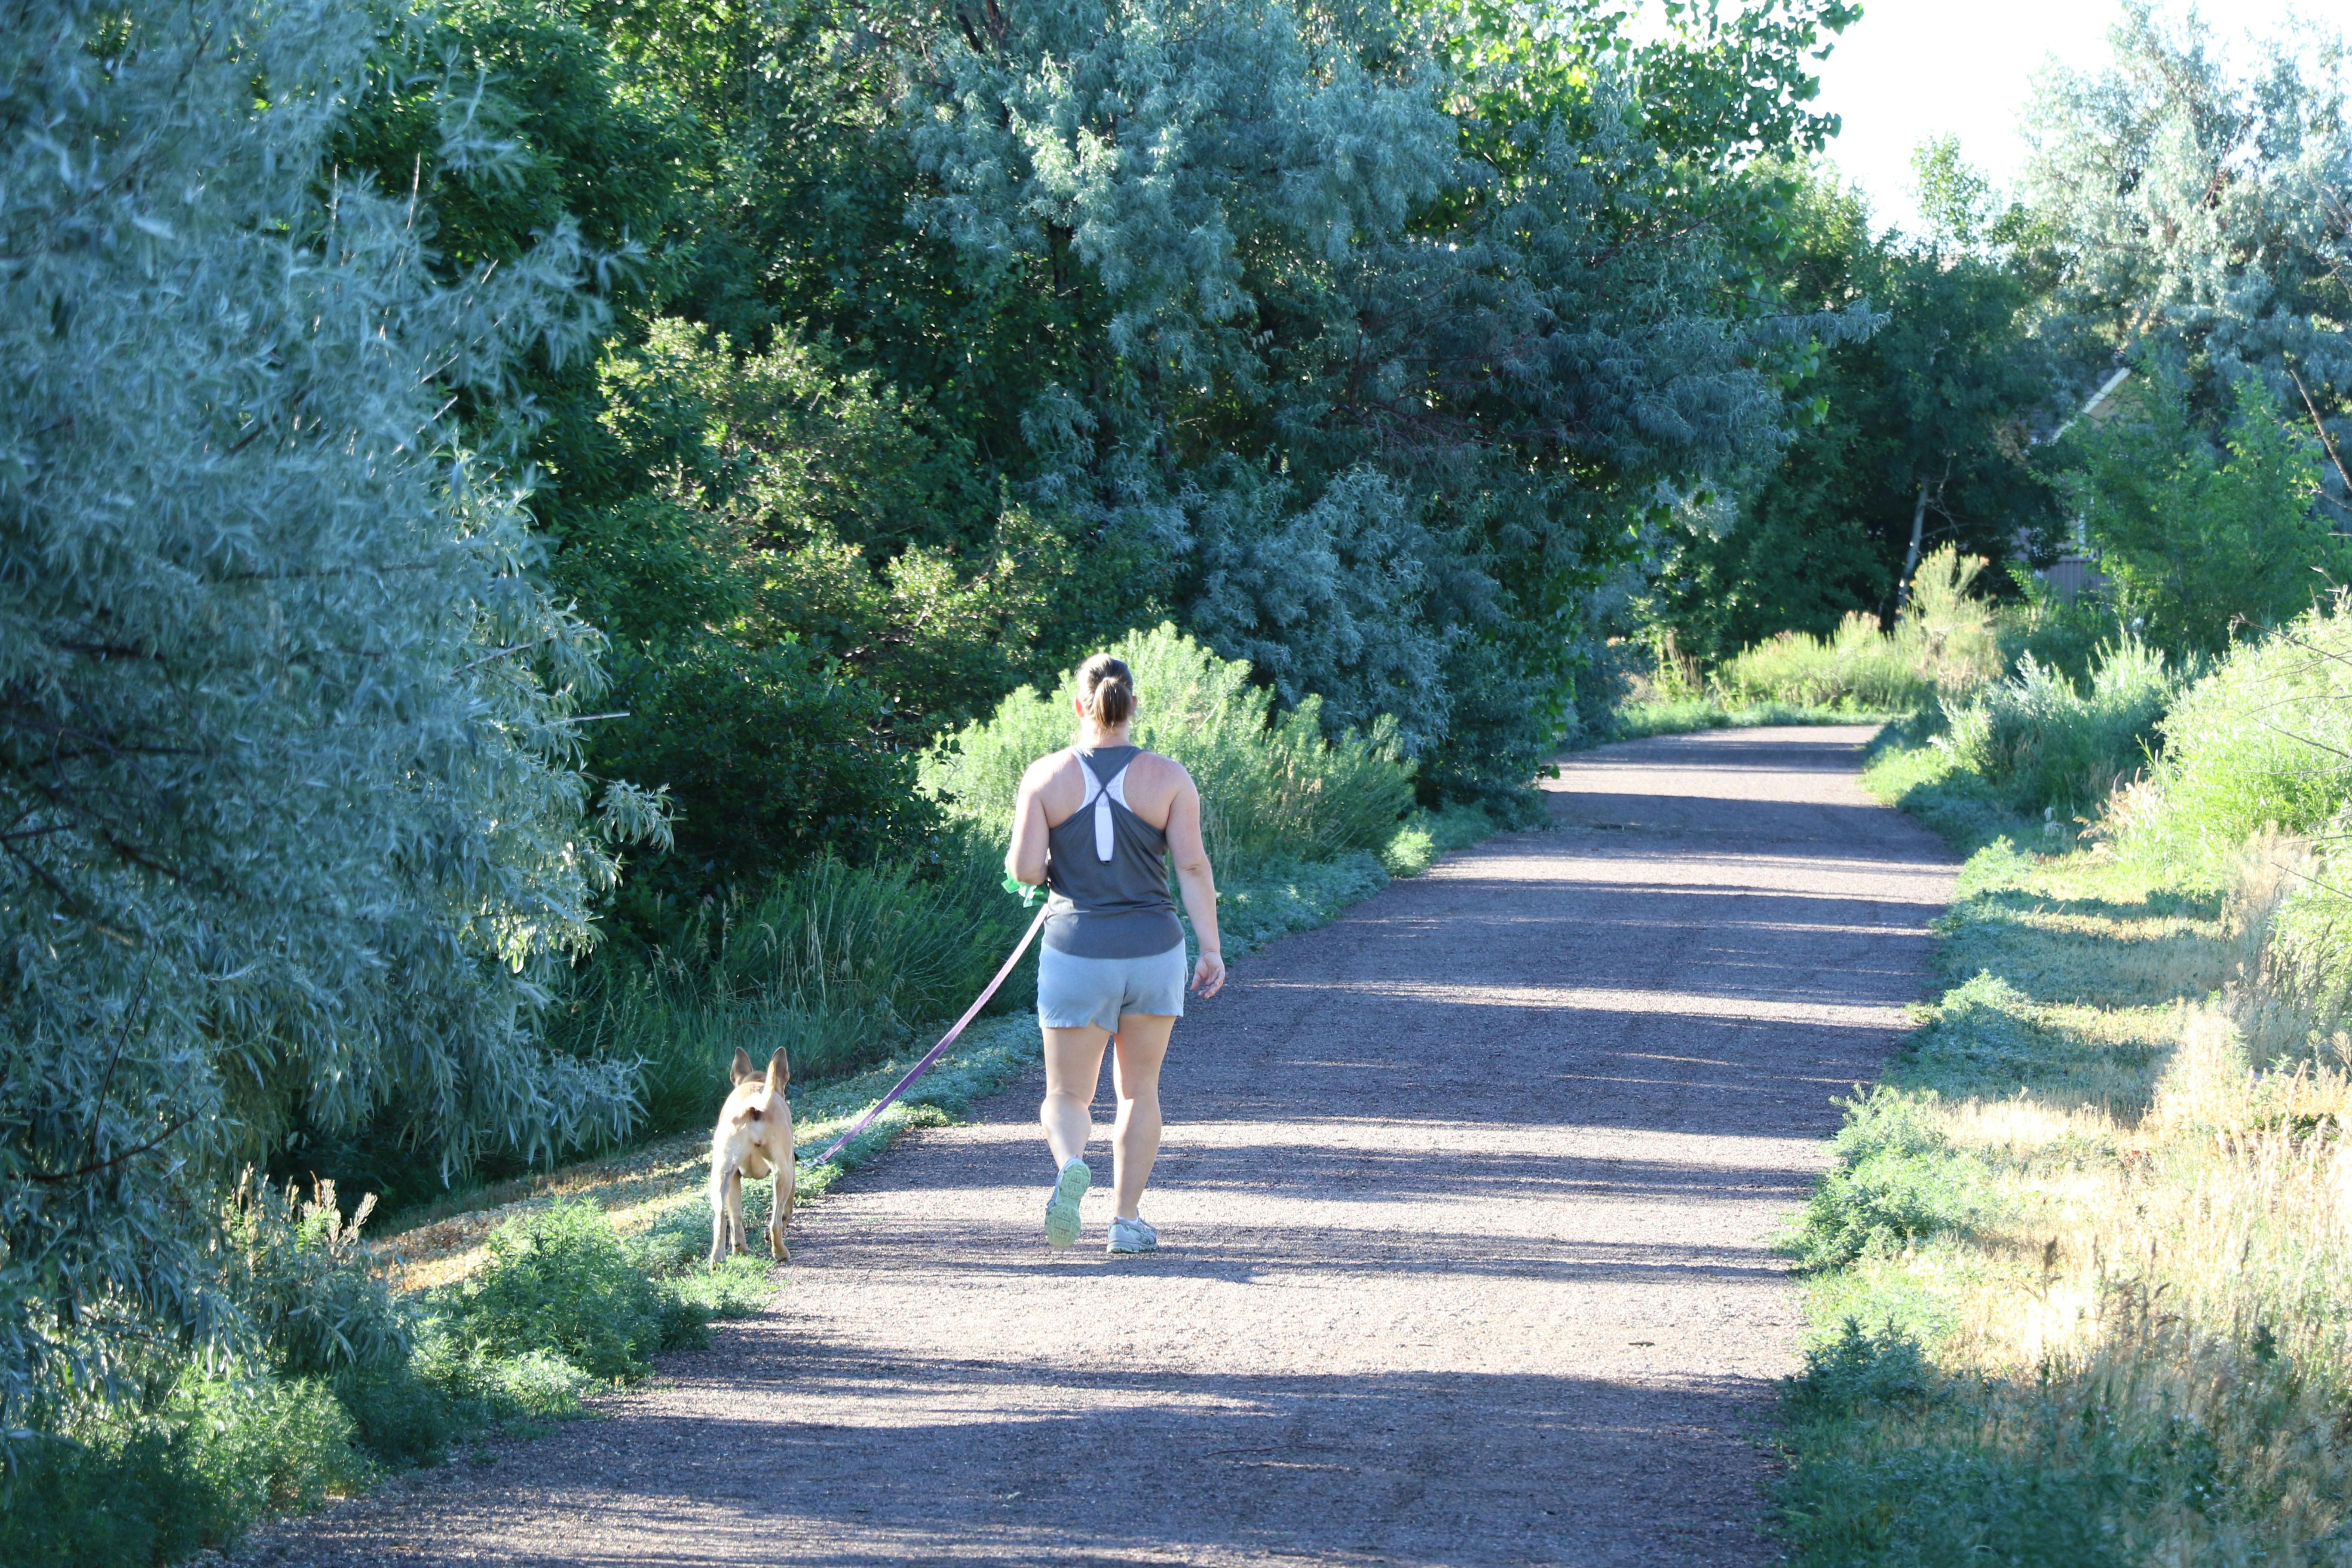 Trail pedestrian with dog